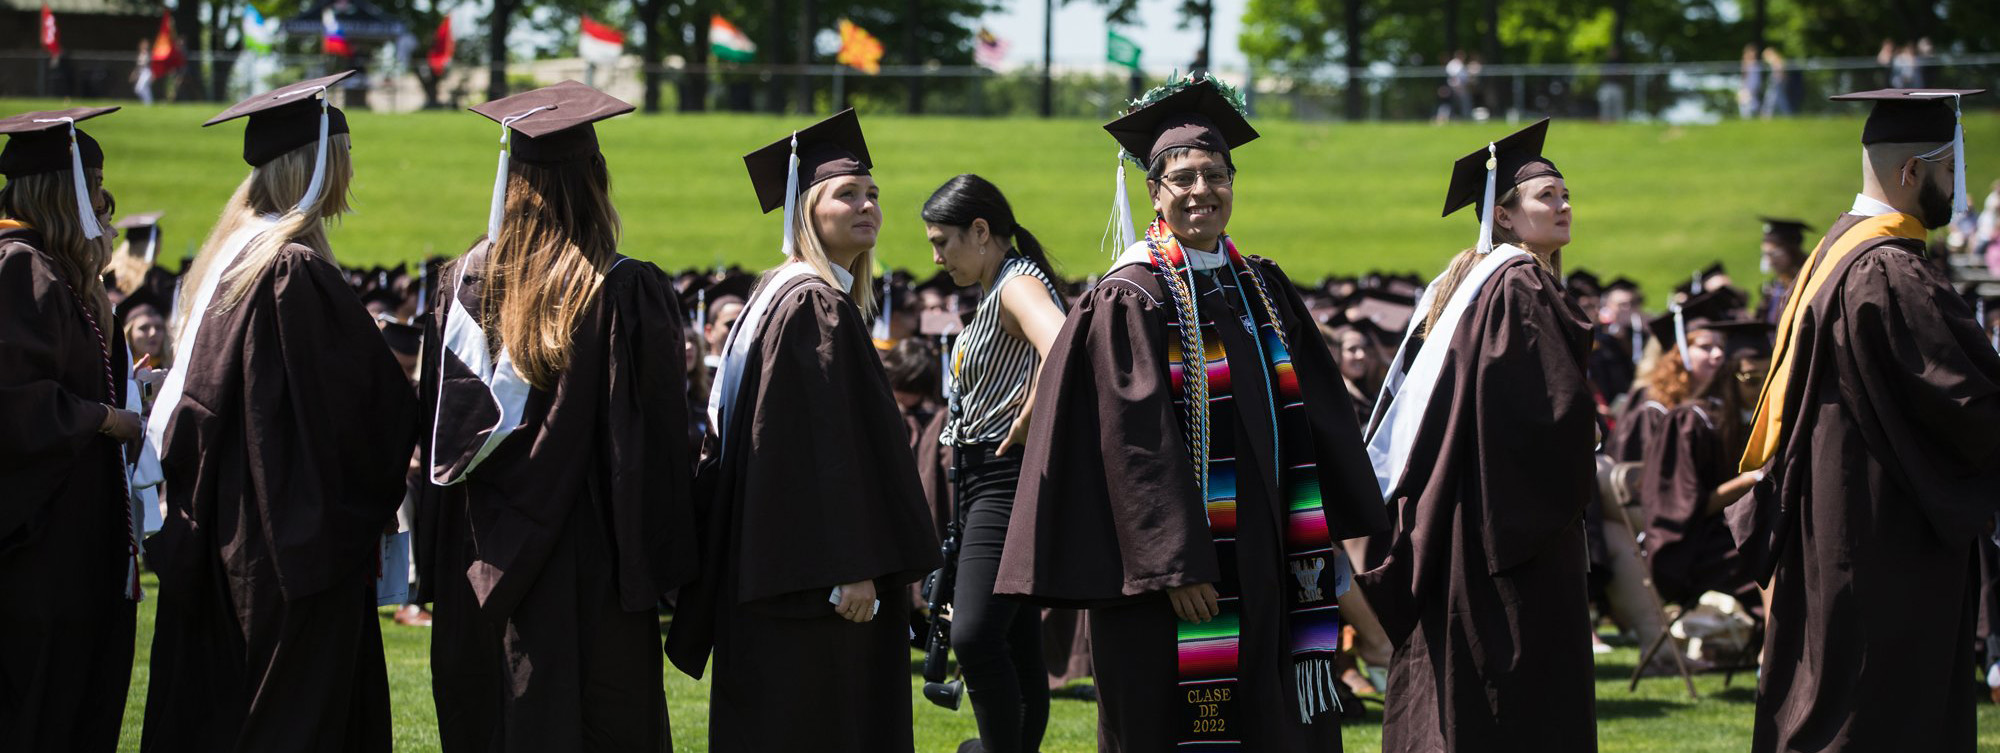 Global Studies students graduating